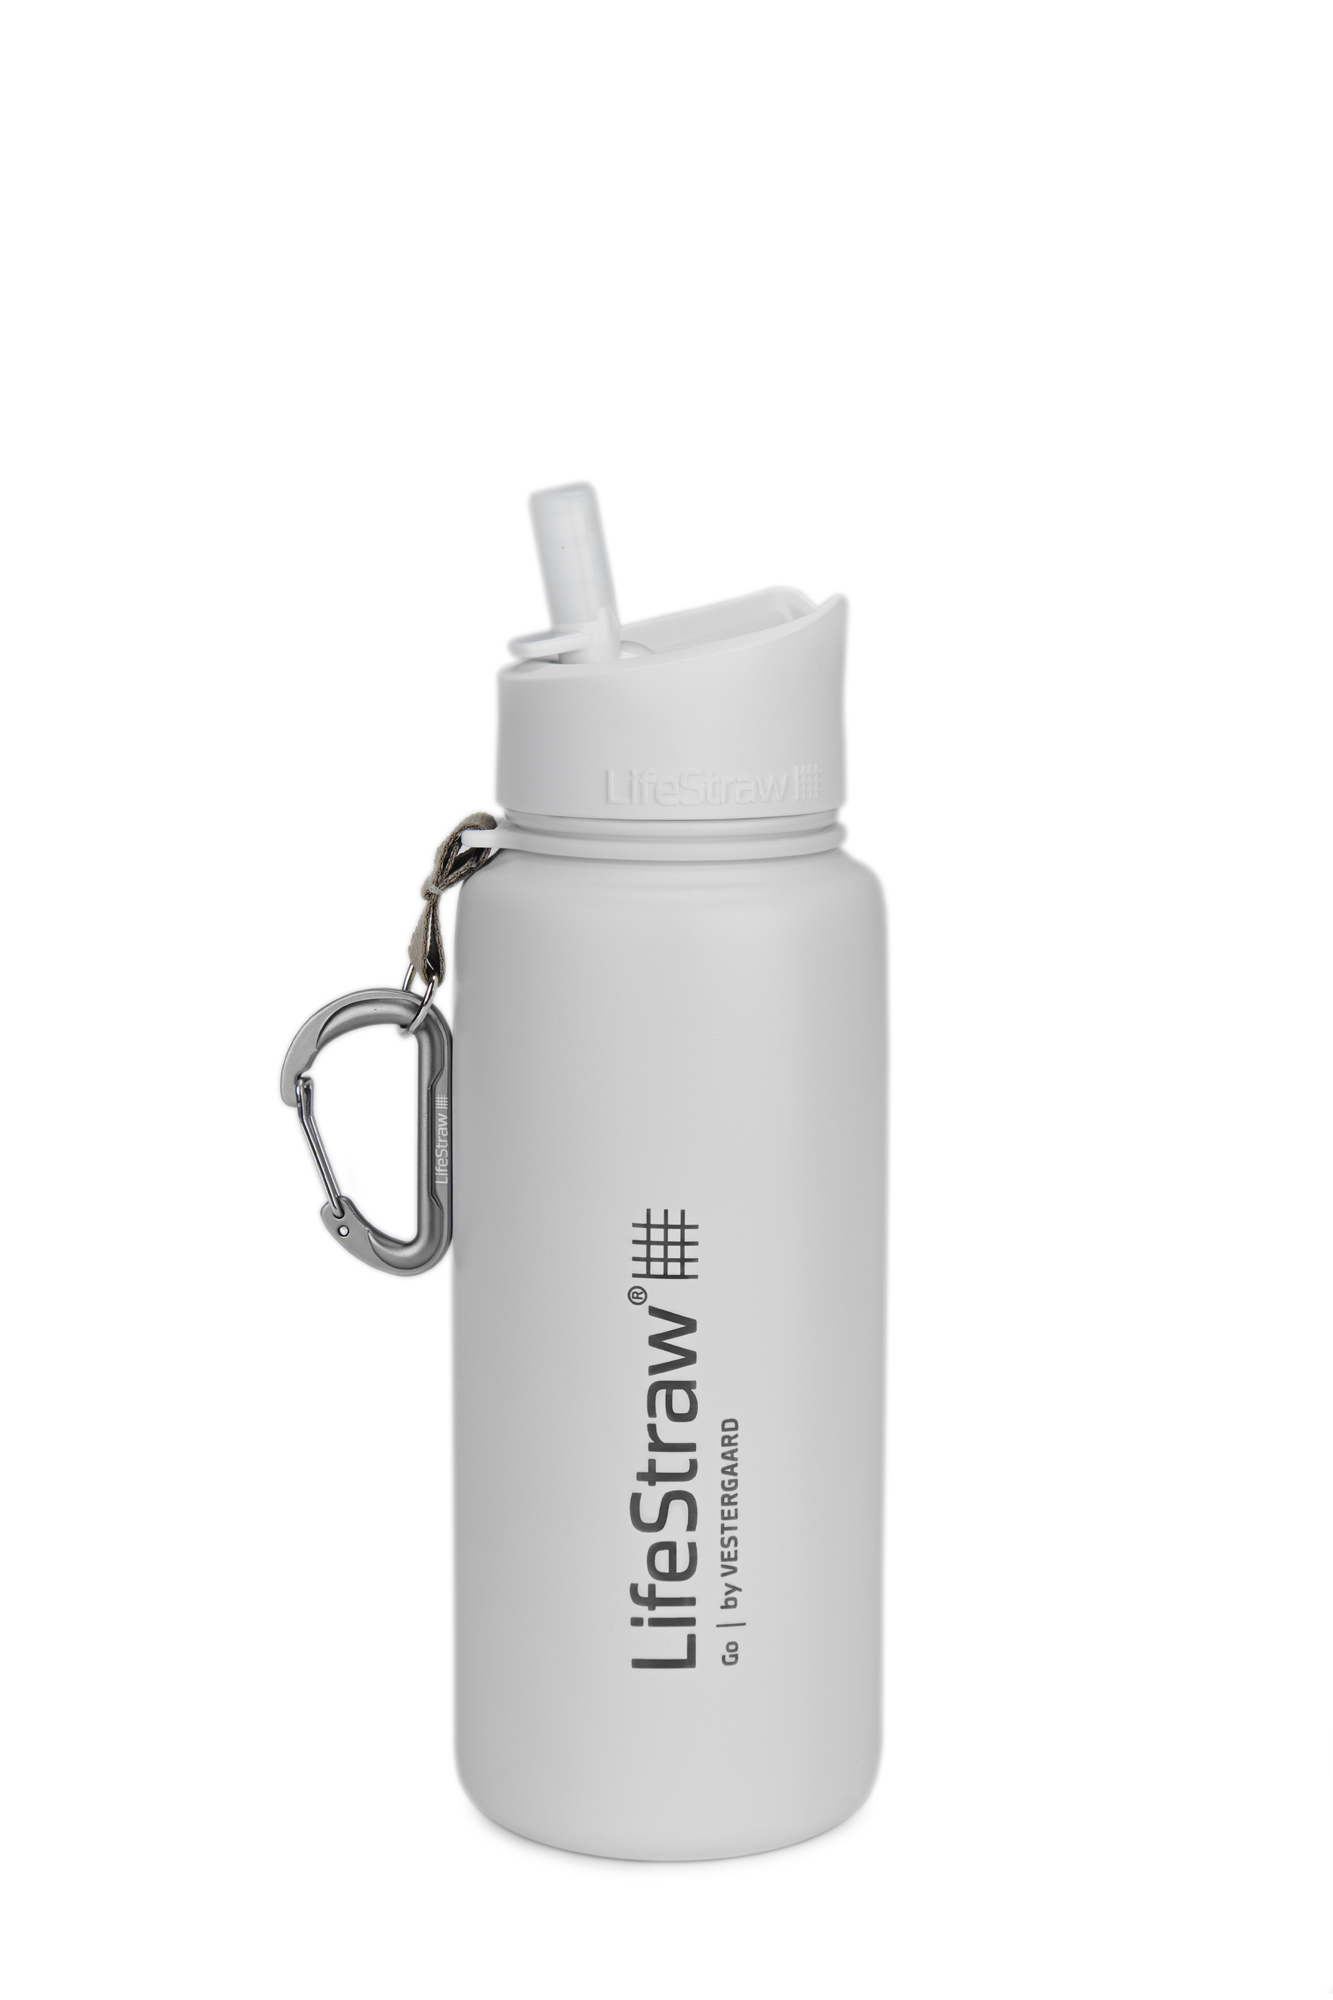 LifeStraw Go Stainless Steel (white)